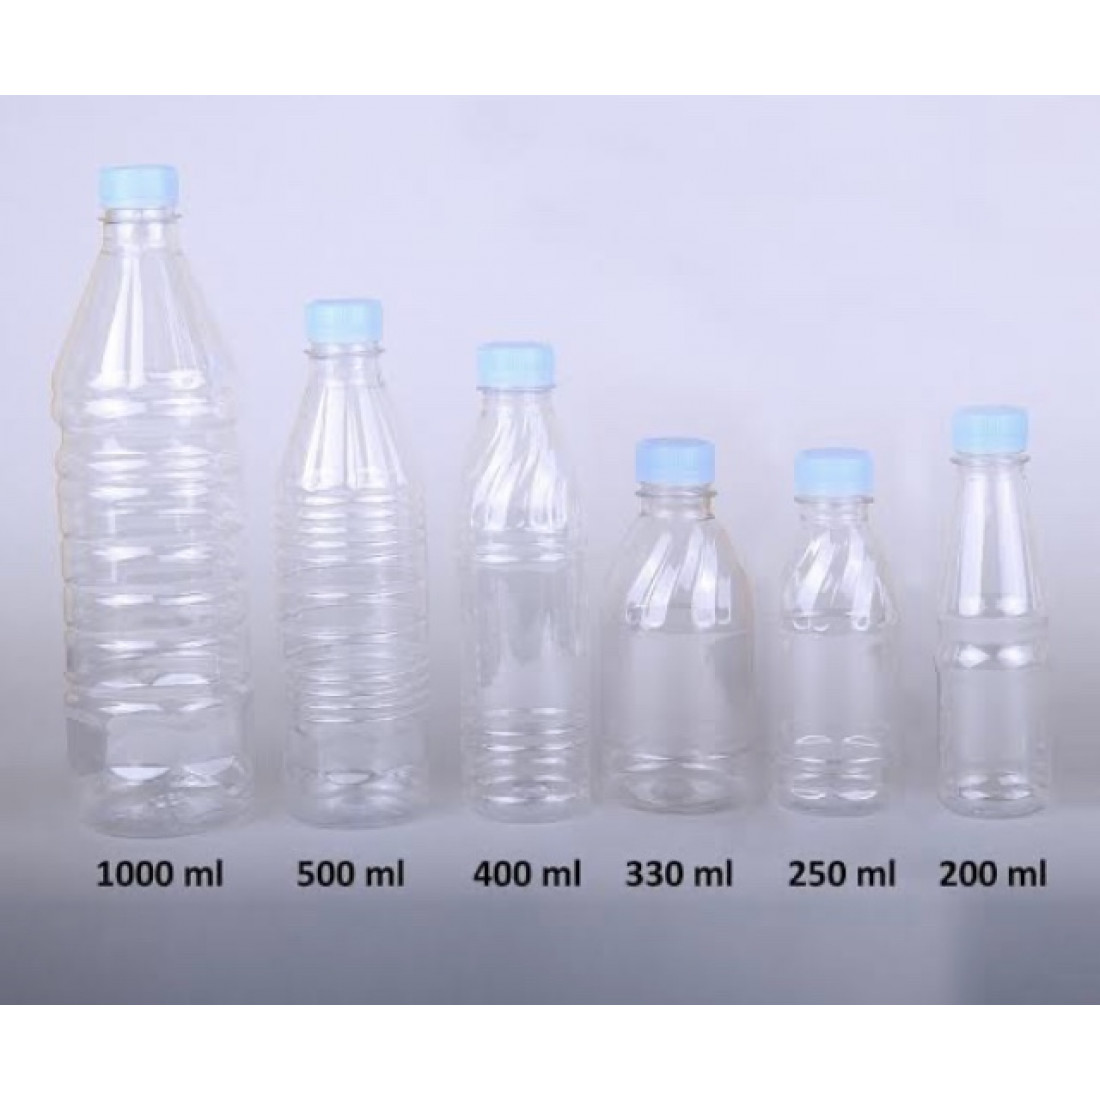 Мл пэт. Этикетка на ПЭТ бутылку 330 мл. Пресса-форма на станок АВ 2000 для флакона из ПЭТ 400 мл «Eco». Вода в бутылке объем 250 мл. + Sise модули.